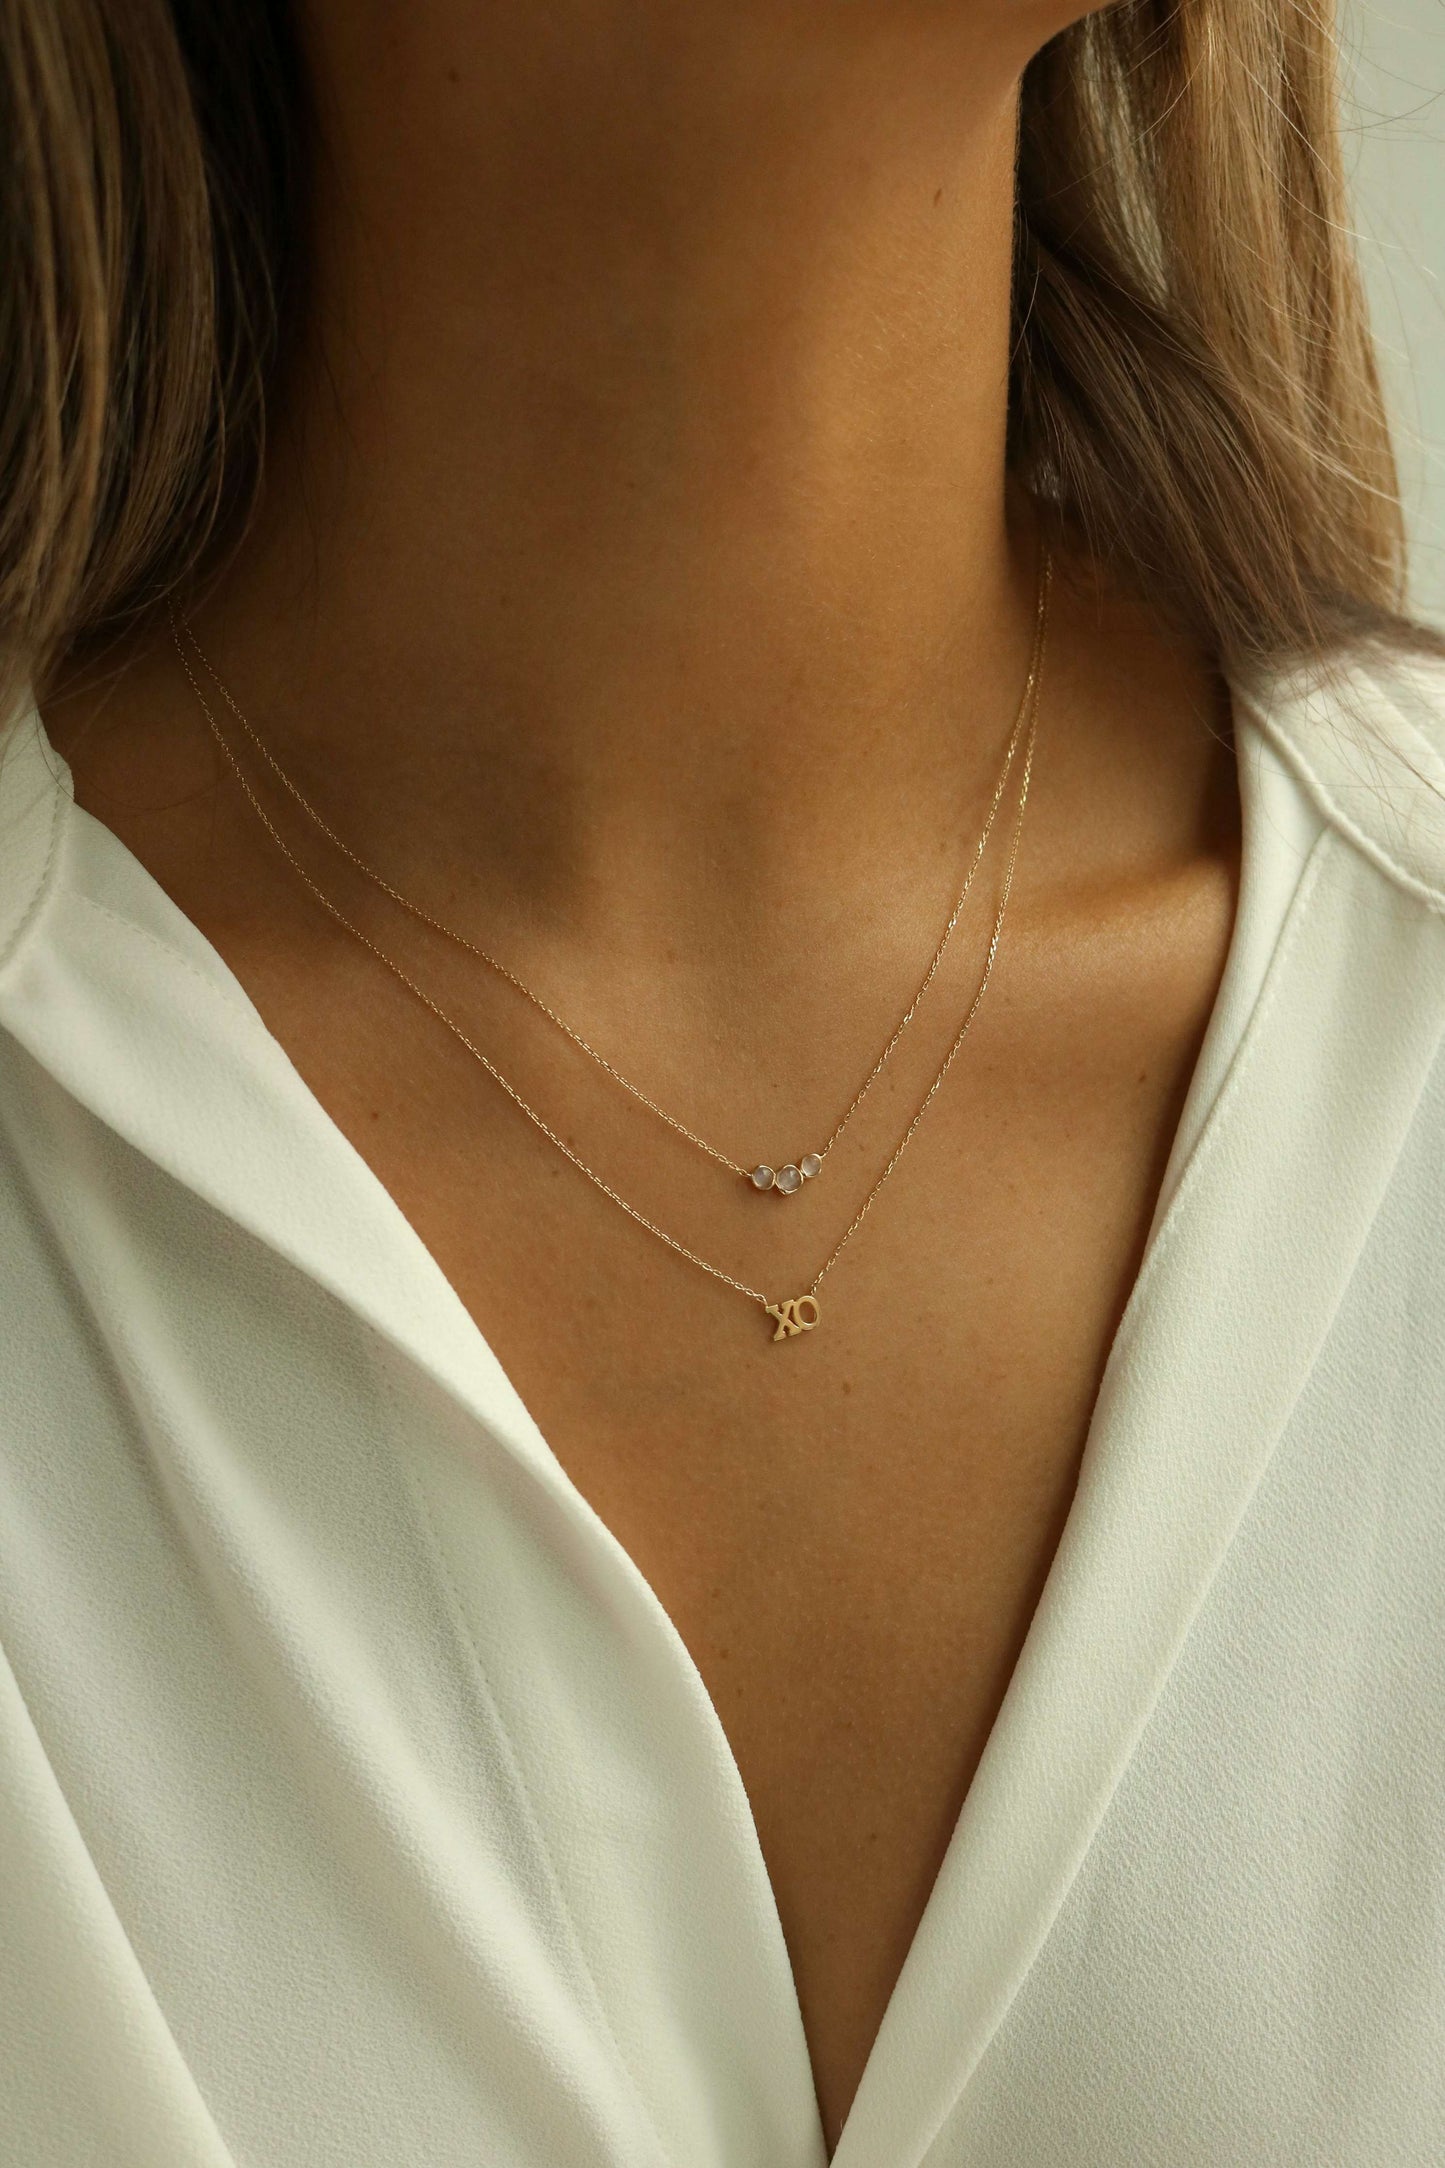 XOXO necklace layered with moonstone 